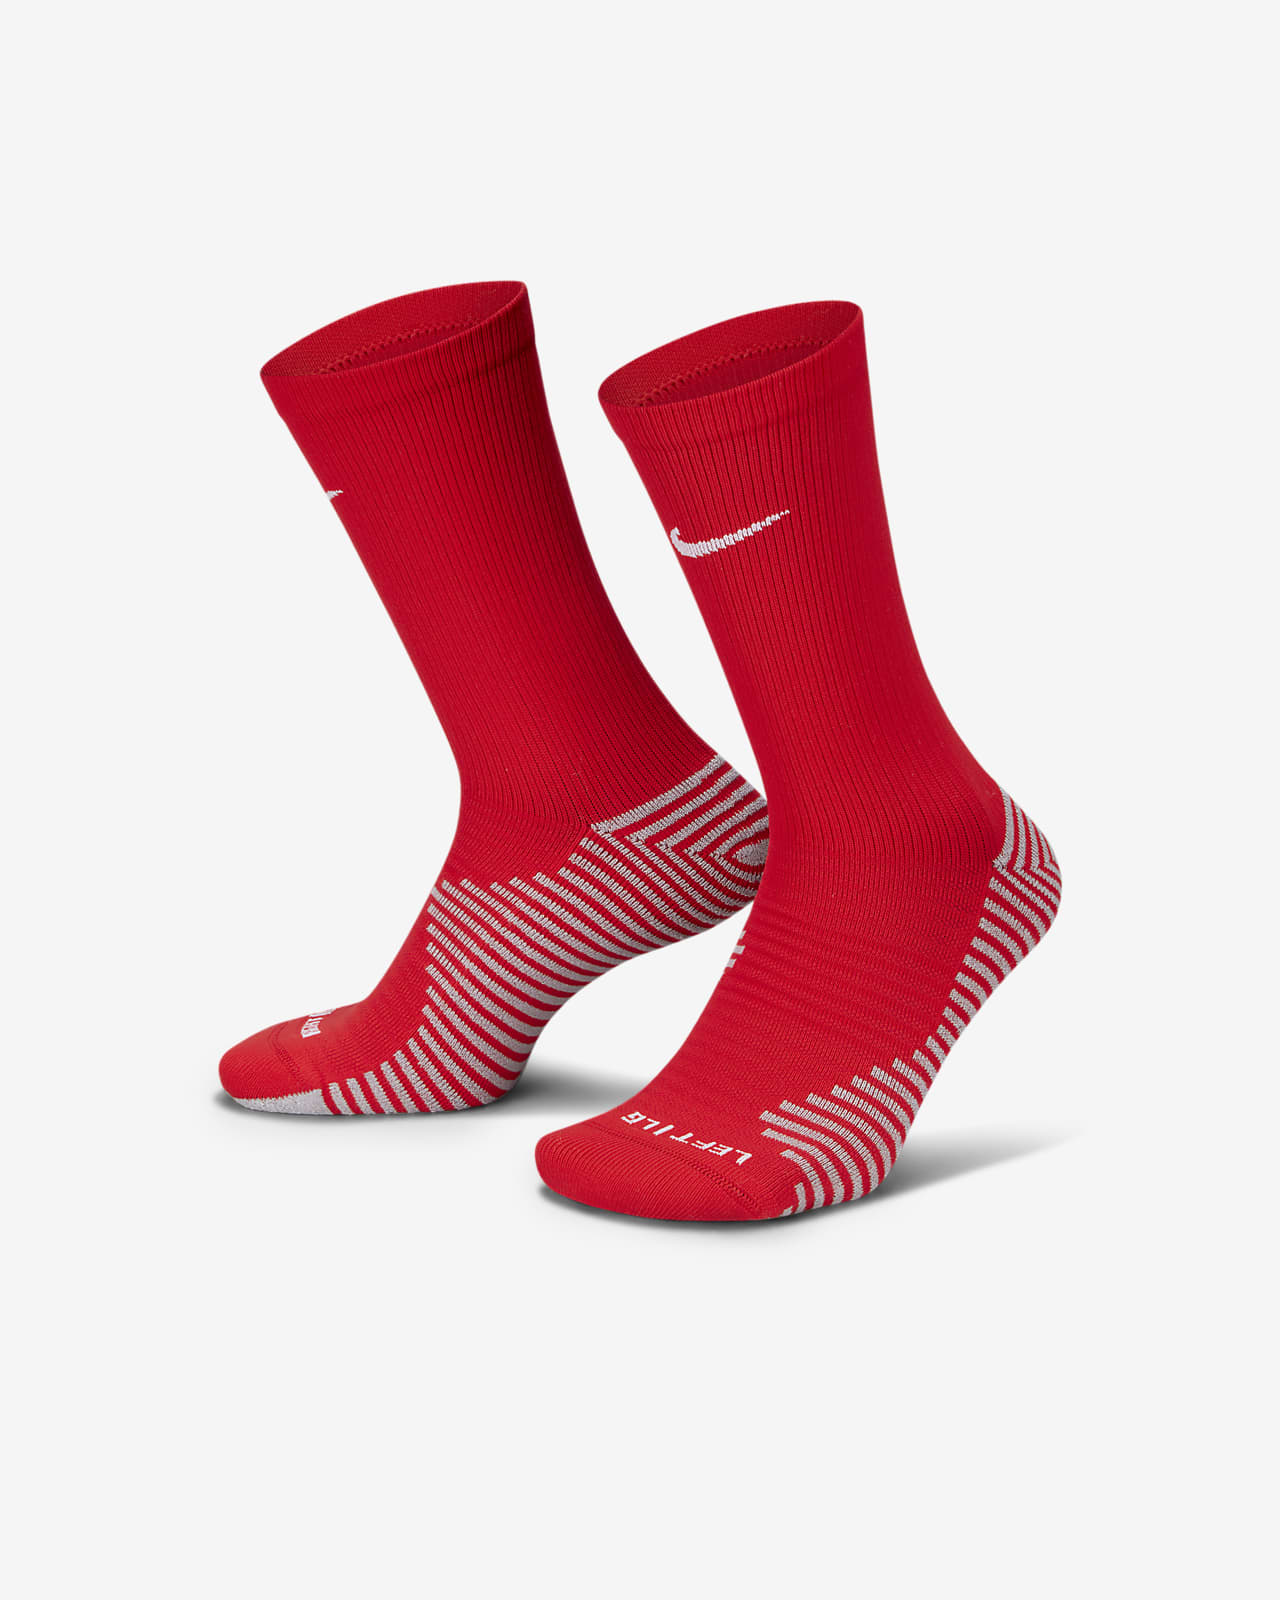 Nike Grip Strike Light Weight Crew Socks - Mens Clothing - Socks